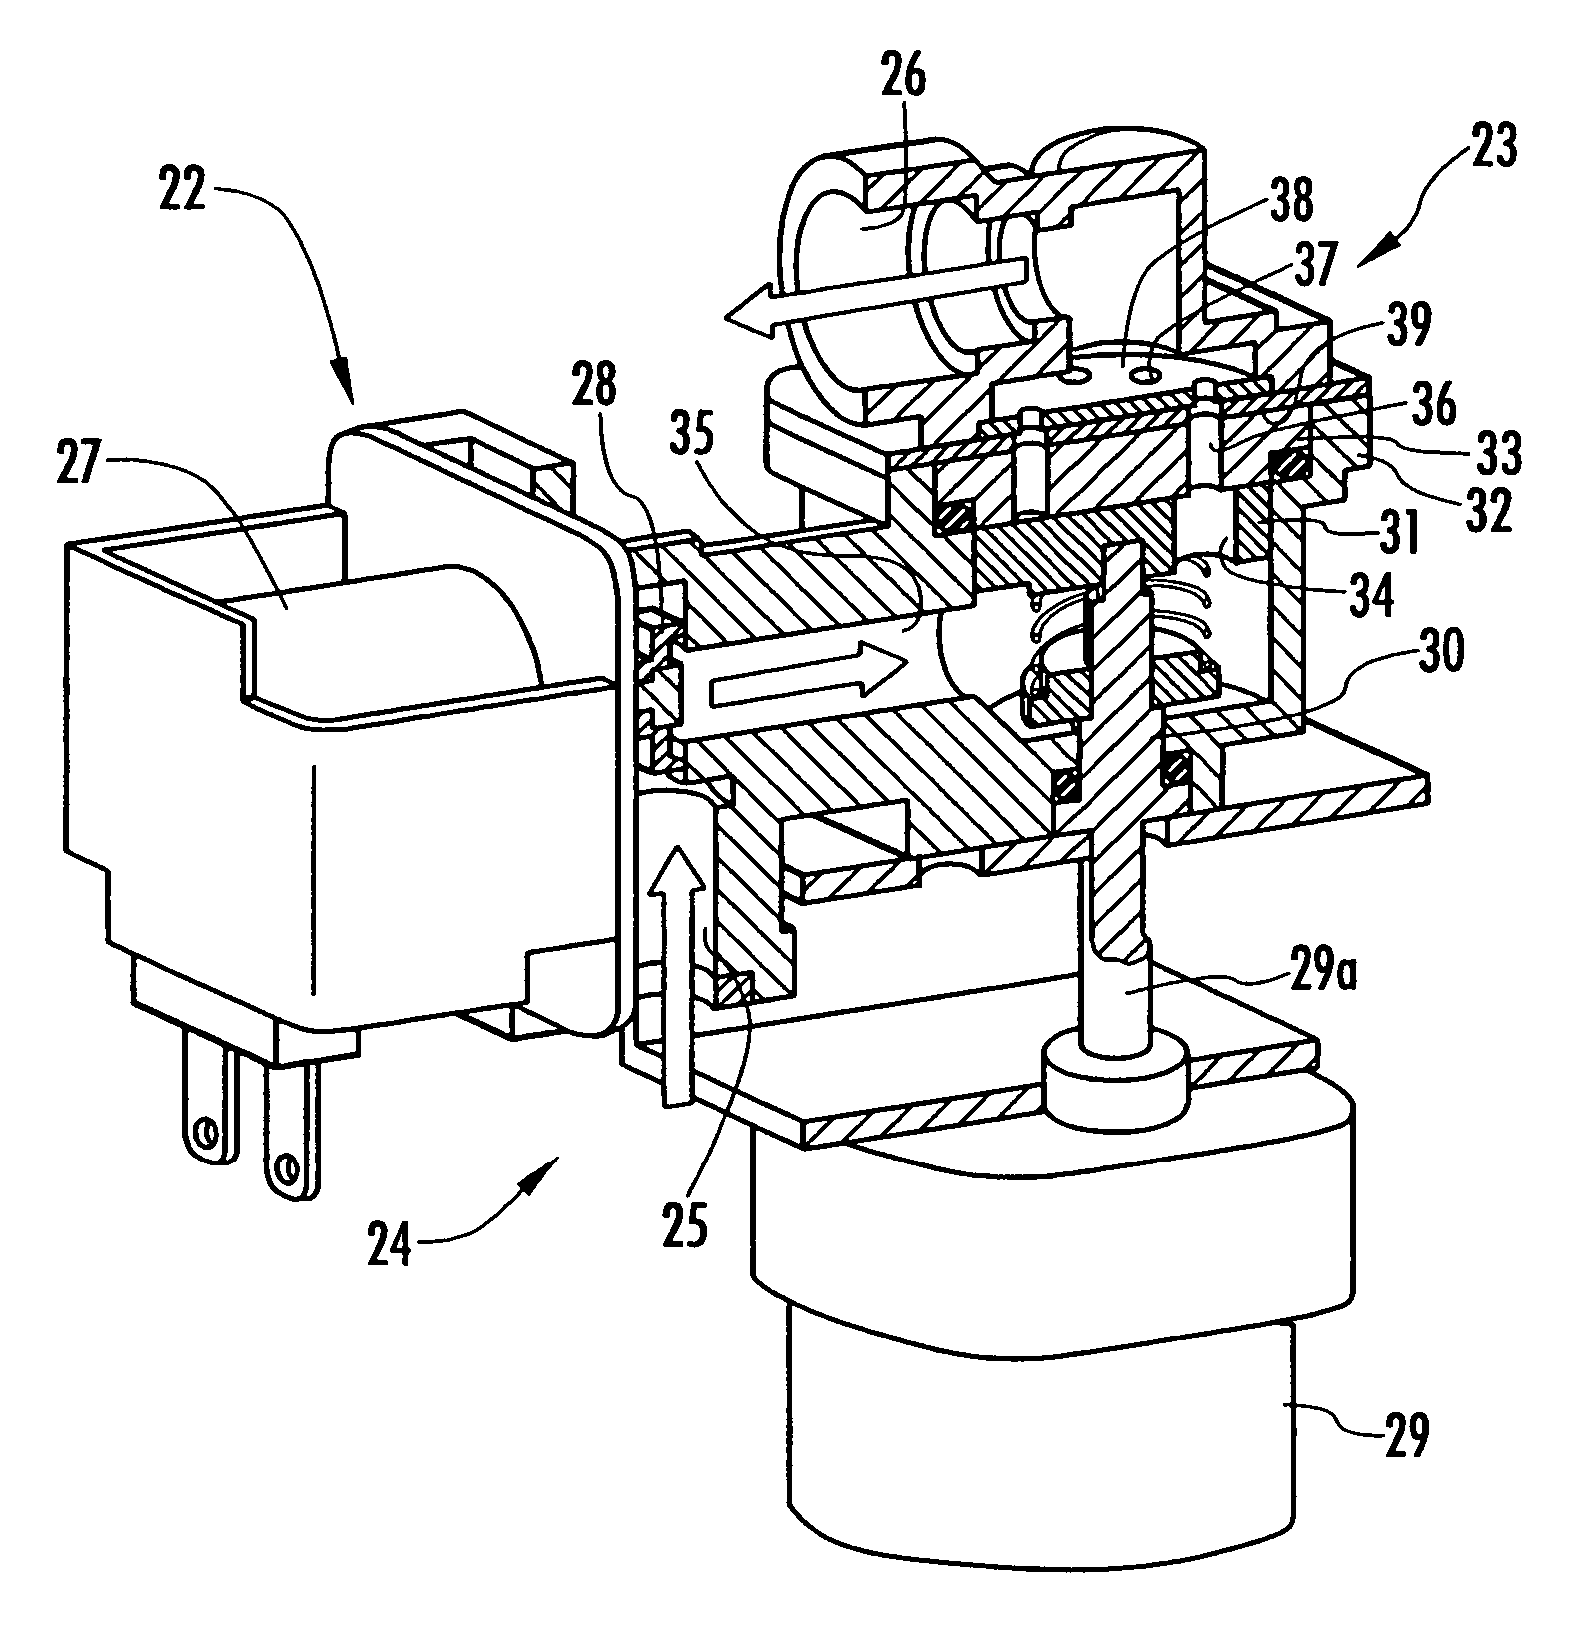 Motor-operated valve apparatus